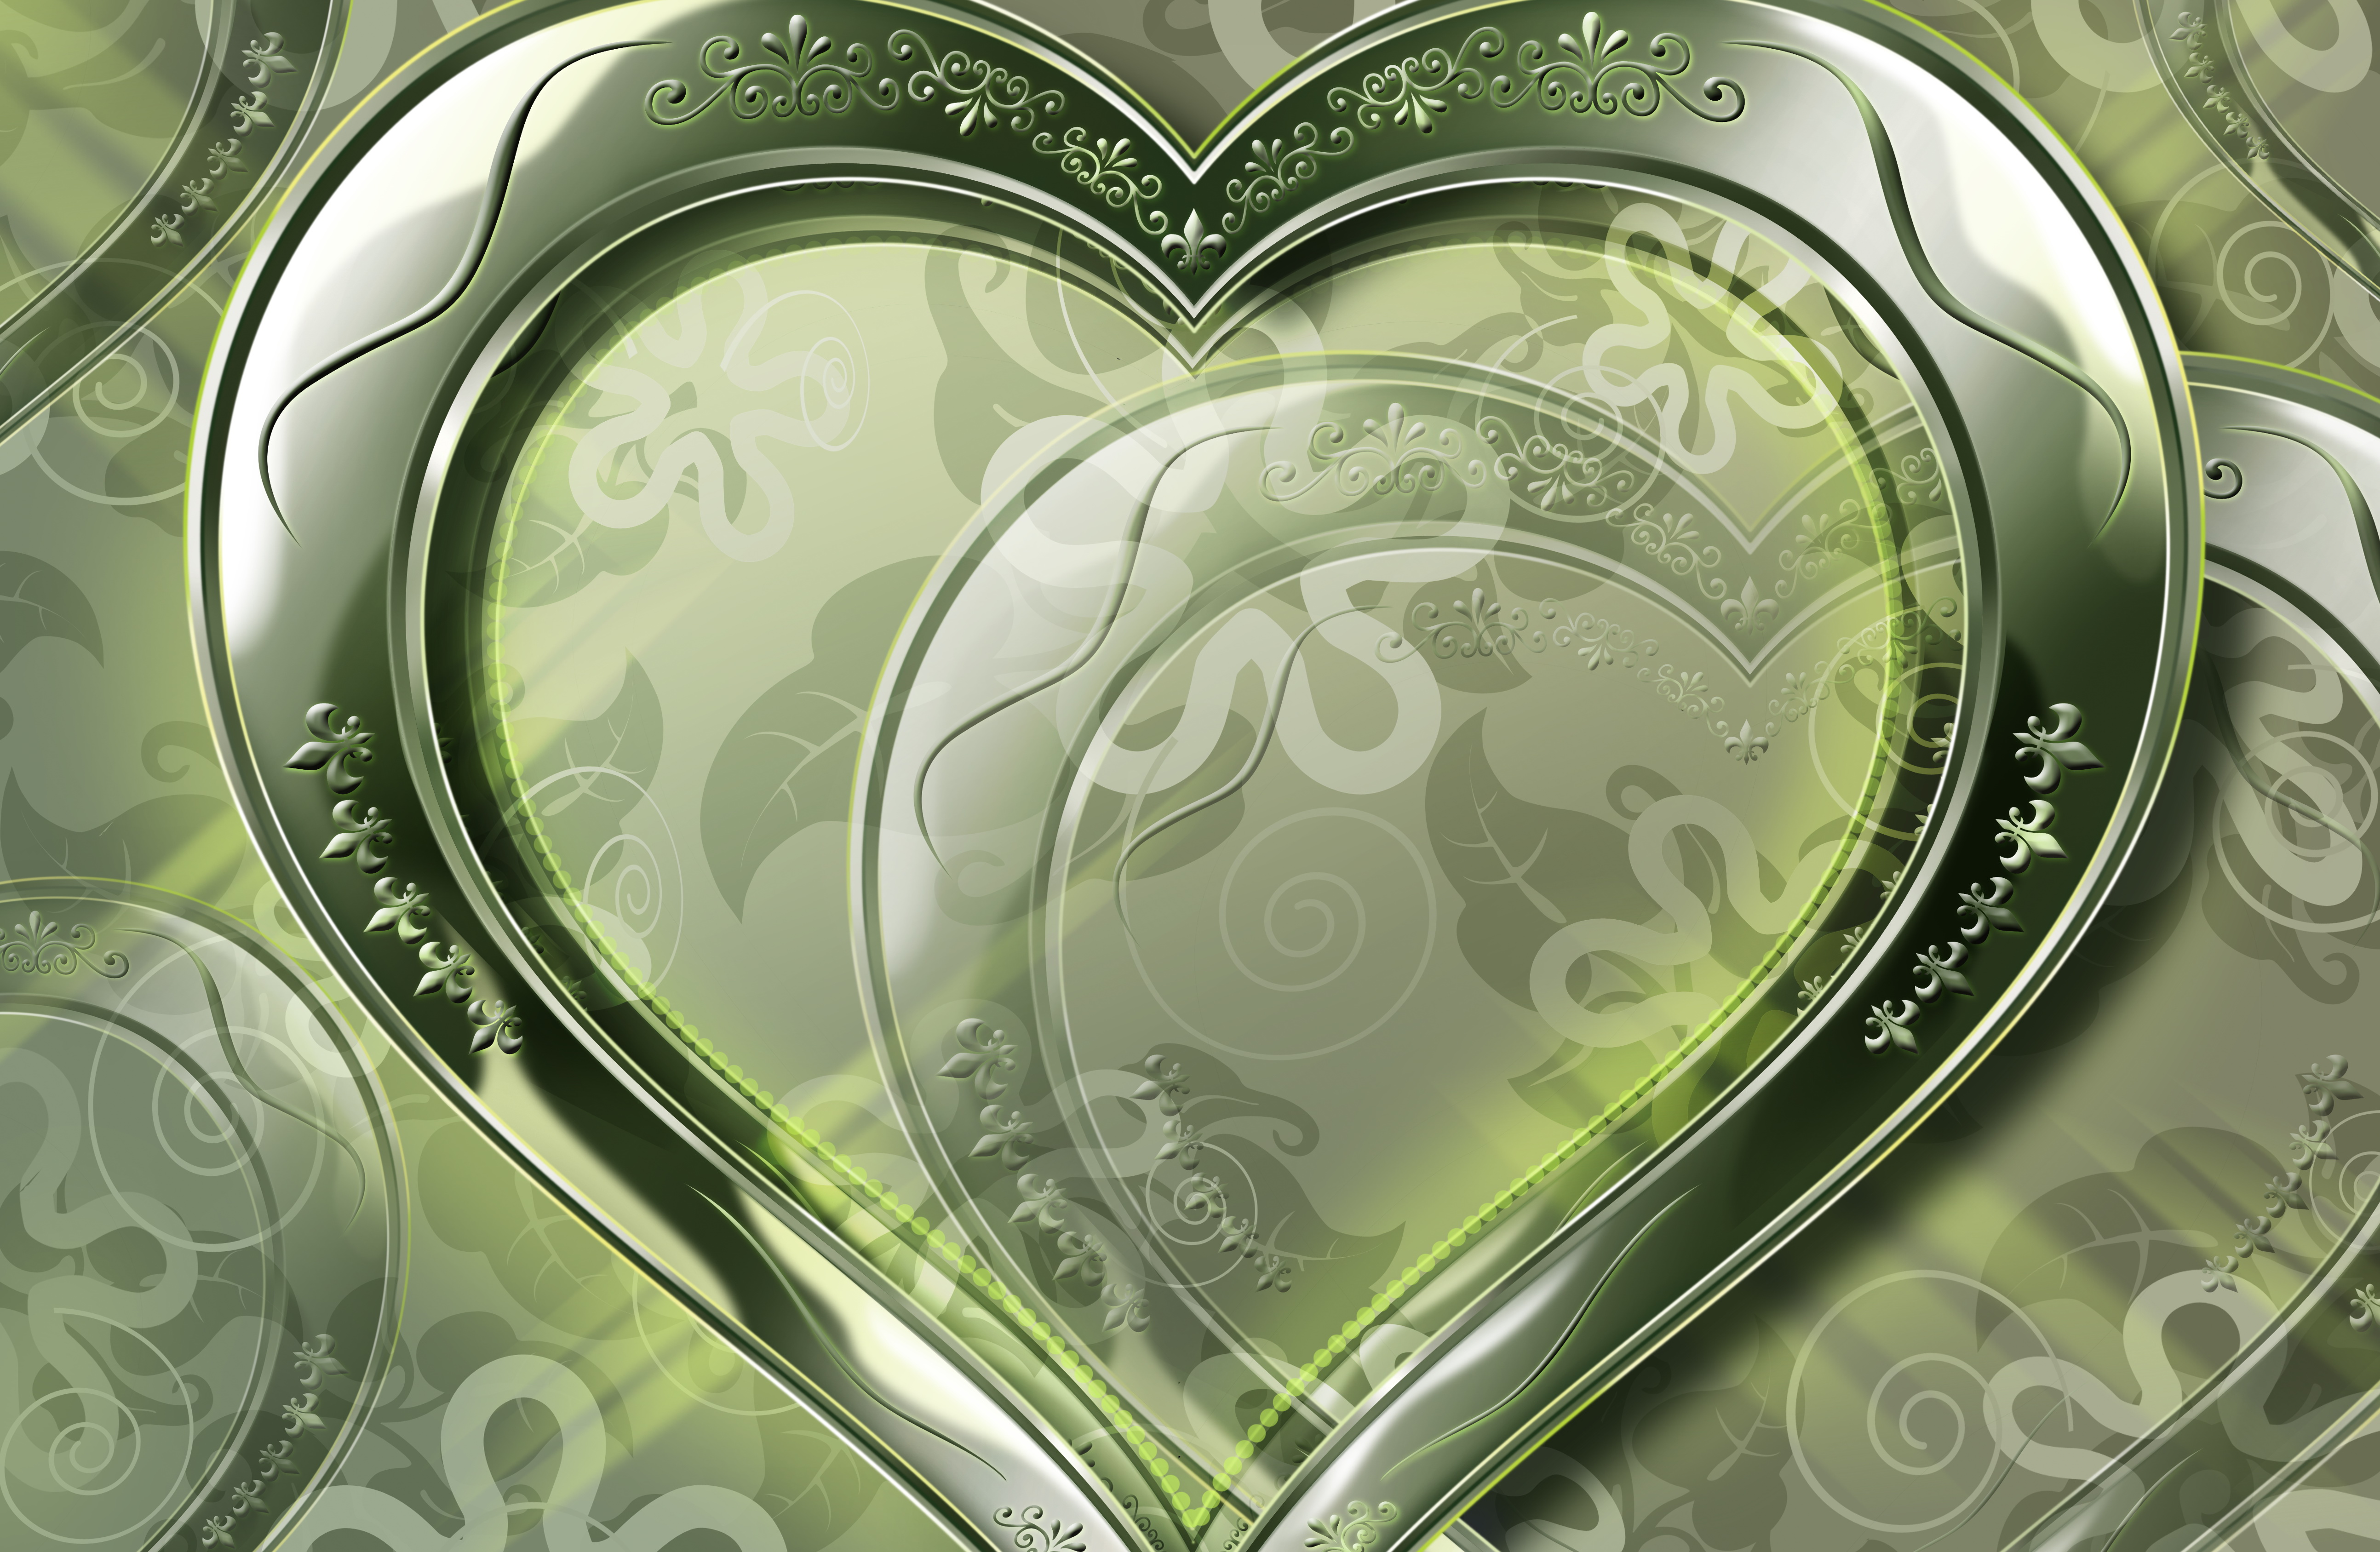 Artistic Heart HD Wallpaper | Background Image